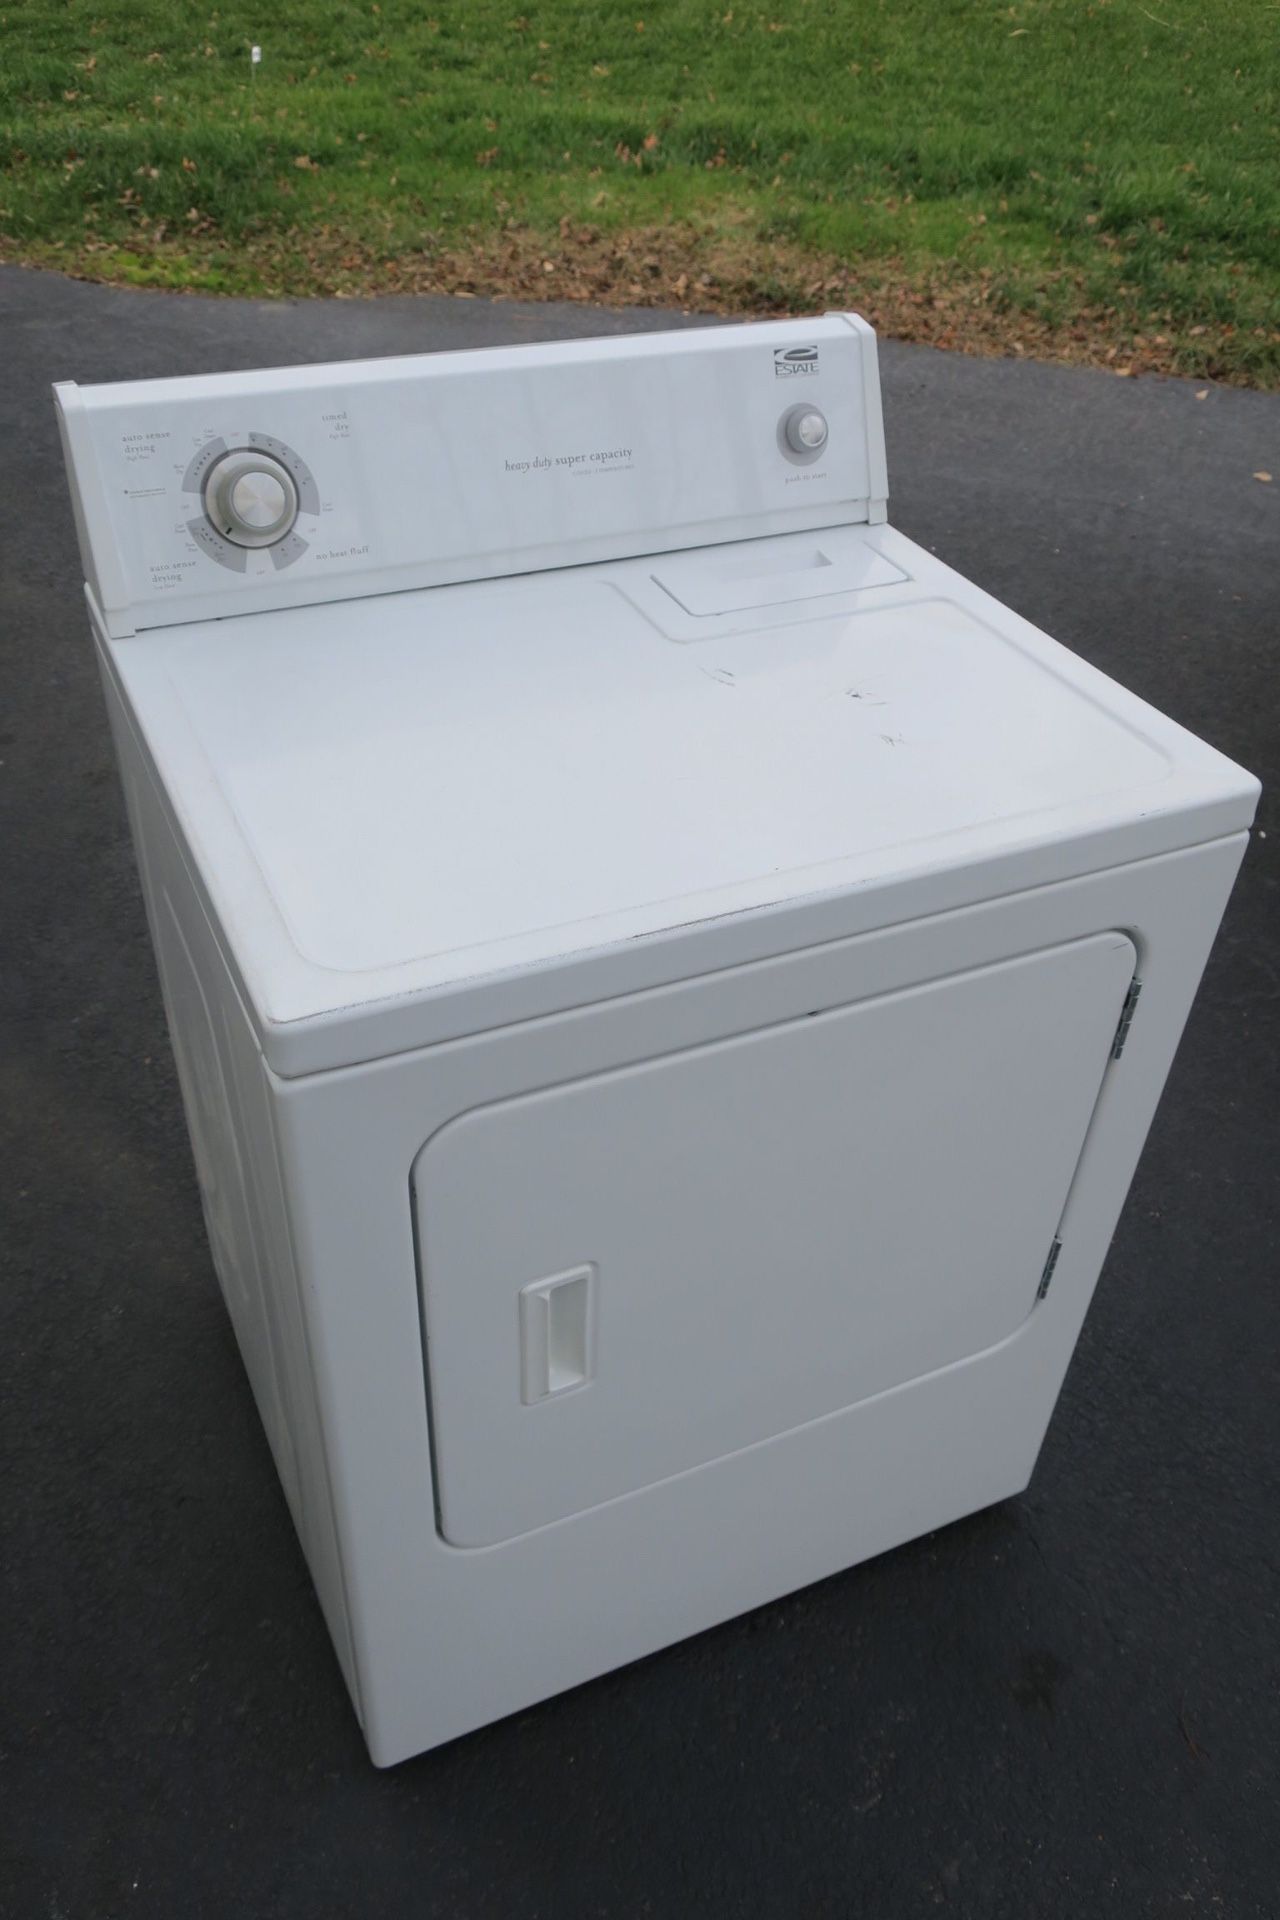 Whirlpool Estate electric dryer